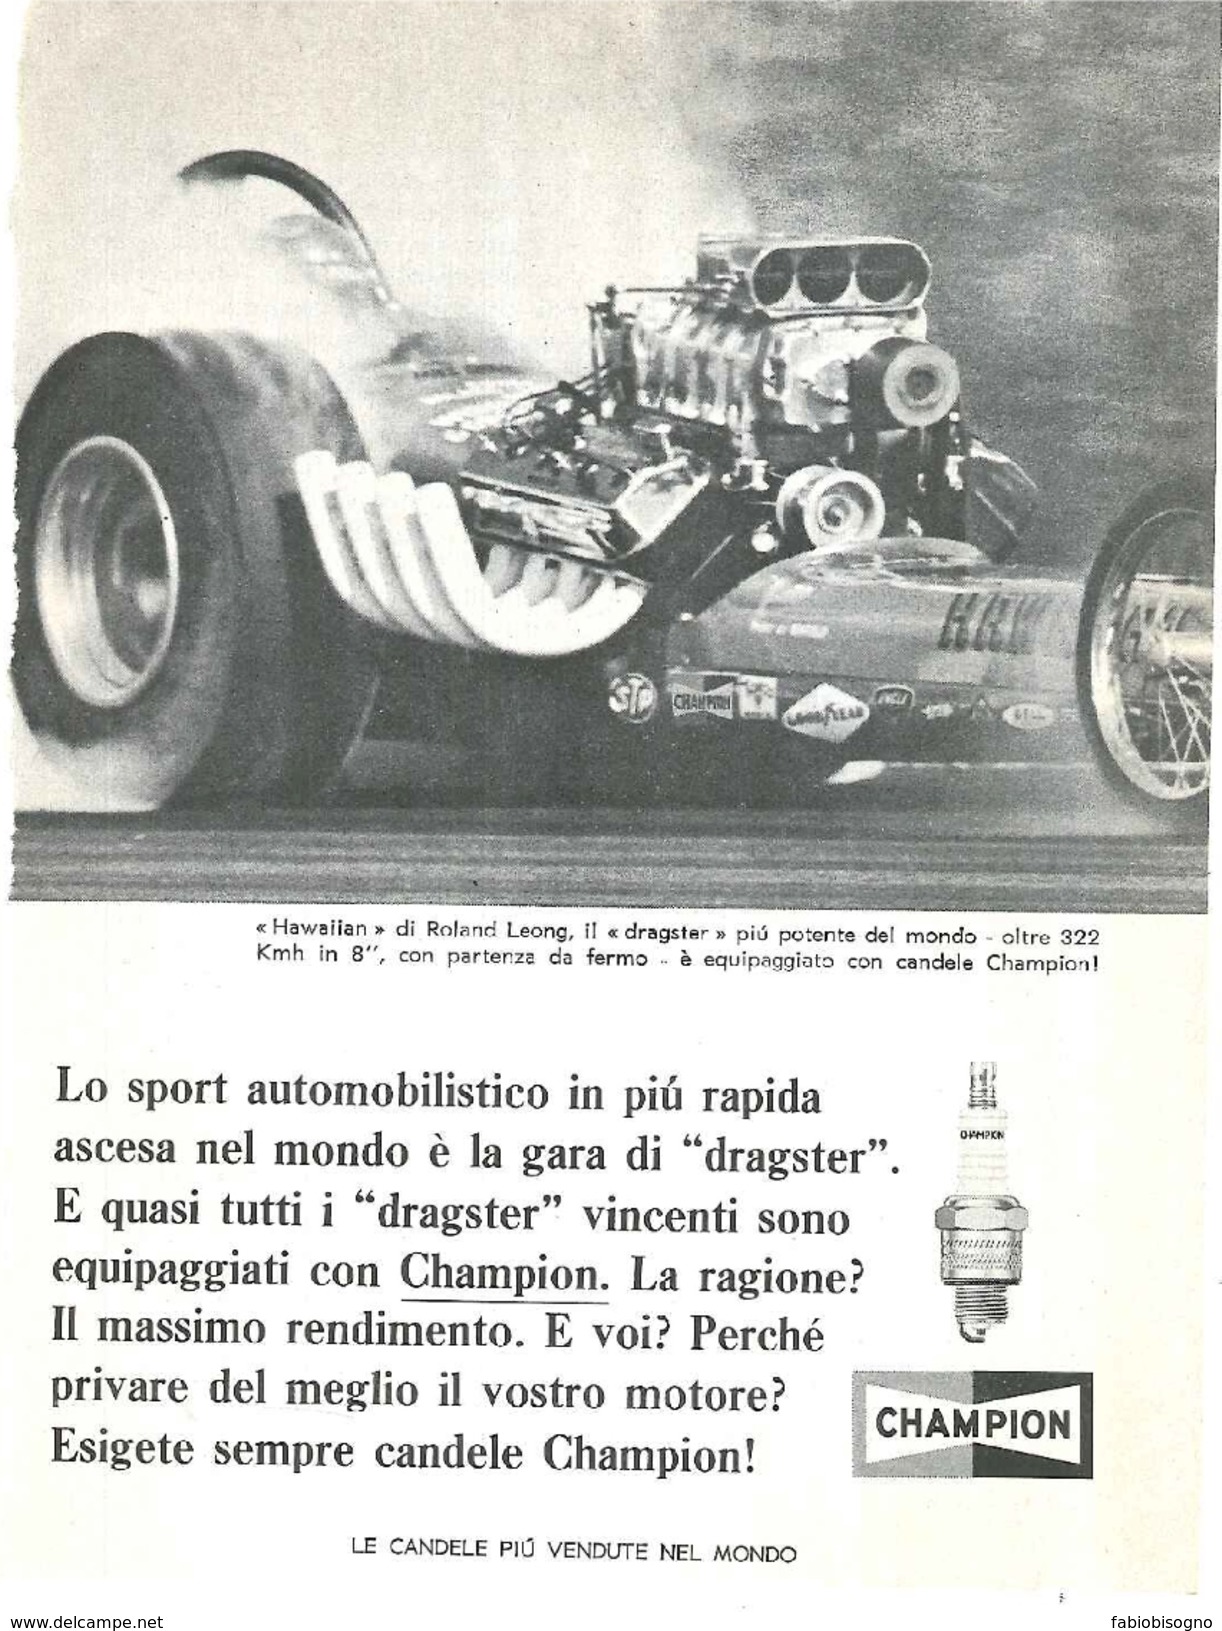 1966 - Roland Leong - Dragster HAWAIIAN - Candele CHAMPION - 1 P. Pubblicità Cm. 13 X 18 - Automobilismo - F1